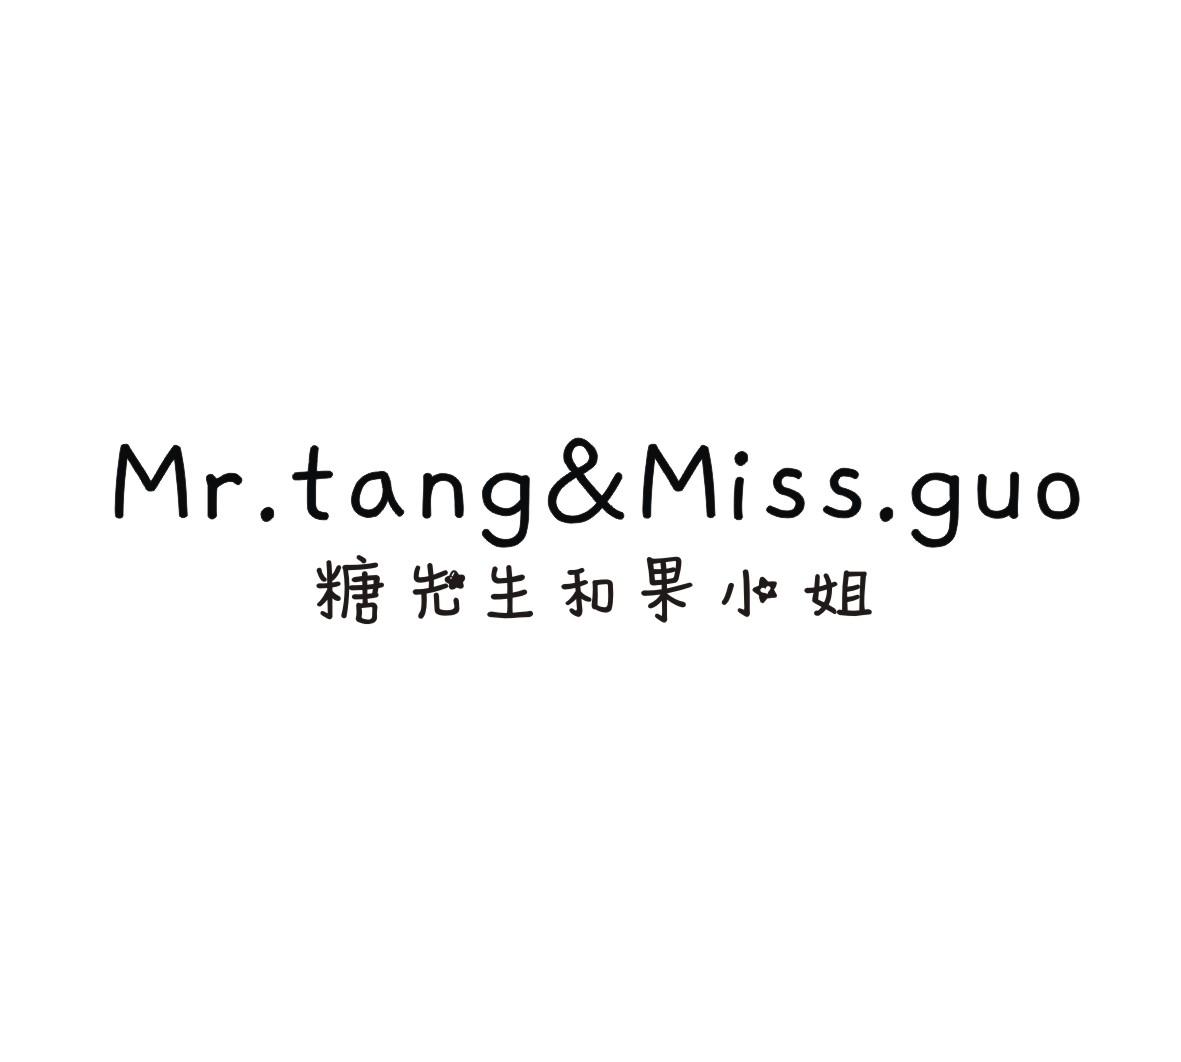 糖先生和果小姐MR.TANG&MISS.GUO